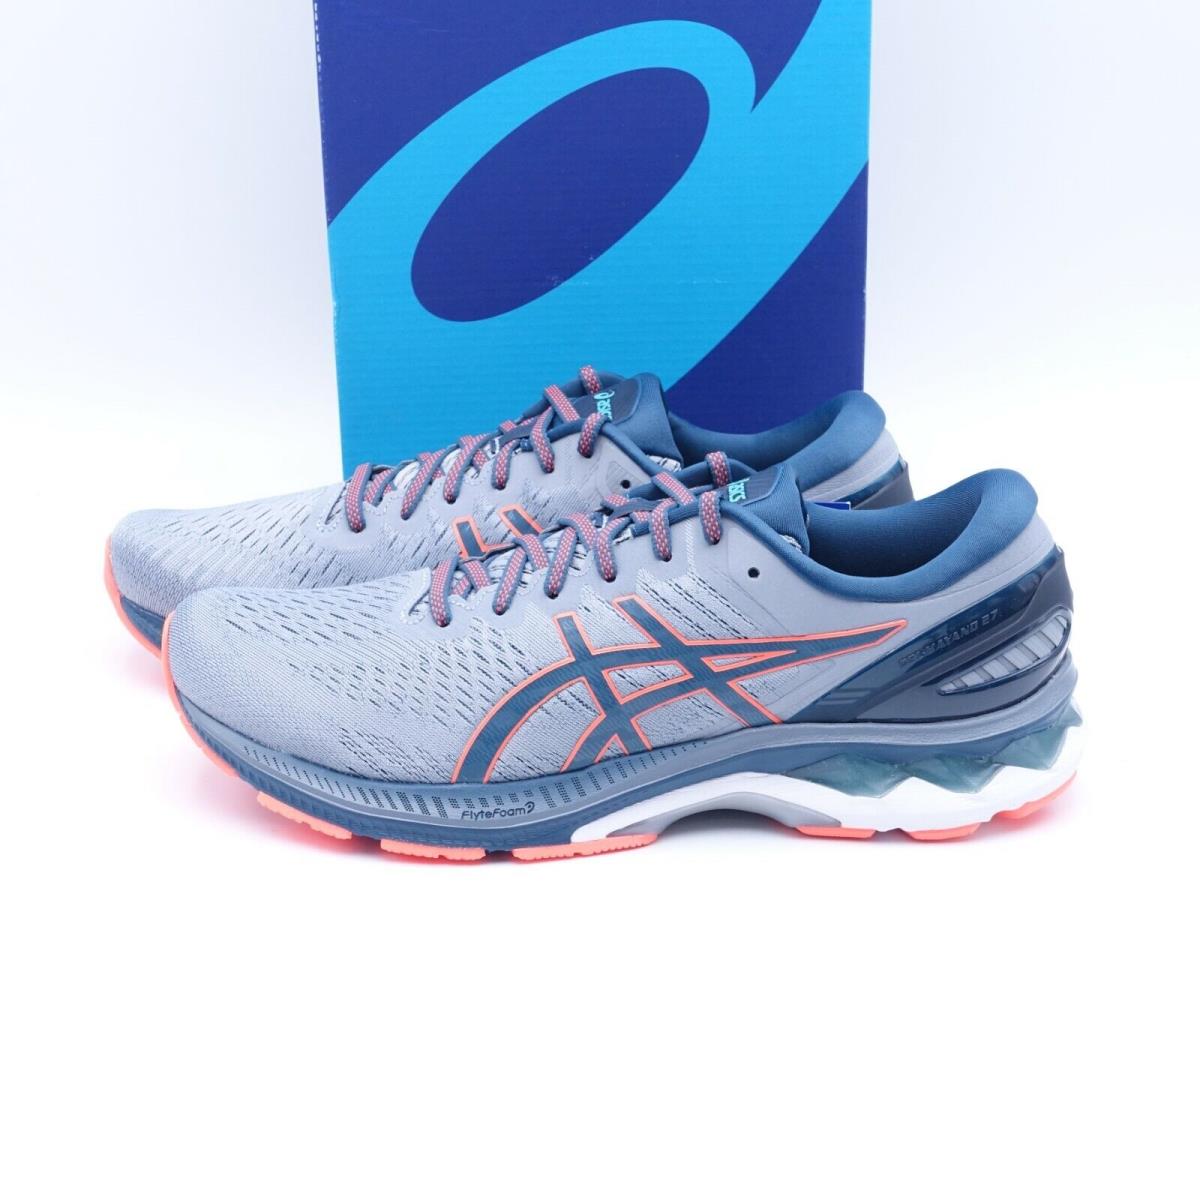 Asics Men`s Gel-kayano 27 Running Shoes 2E Wide 1011A835-021 Sheet Rock |  080460233101 - ASICS shoes - Grey , Sheet Rock/Magnetic Blue Manufacturer |  SporTipTop